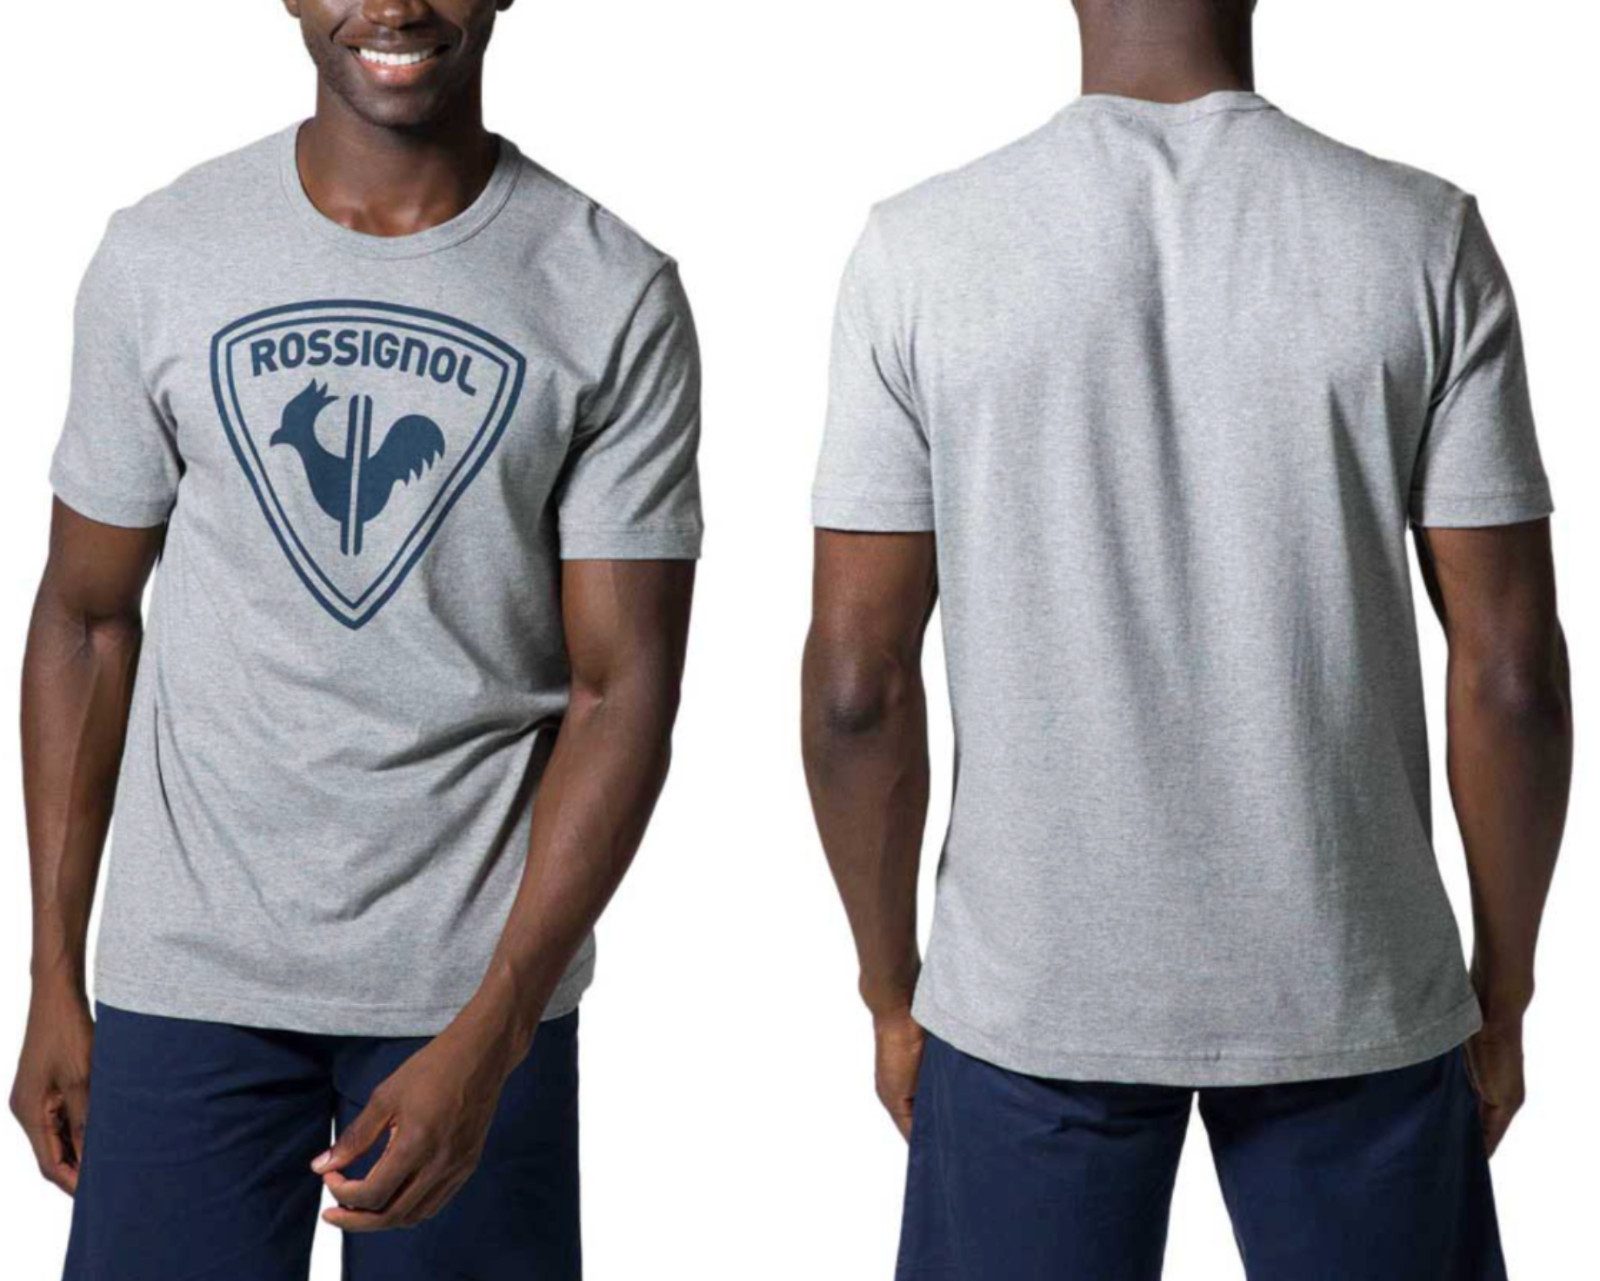 Rossignol T-Shirt ROSSIGNOL LOGO TEE T-shirt Shirt Supreme Comfort Cotton Sport Top S